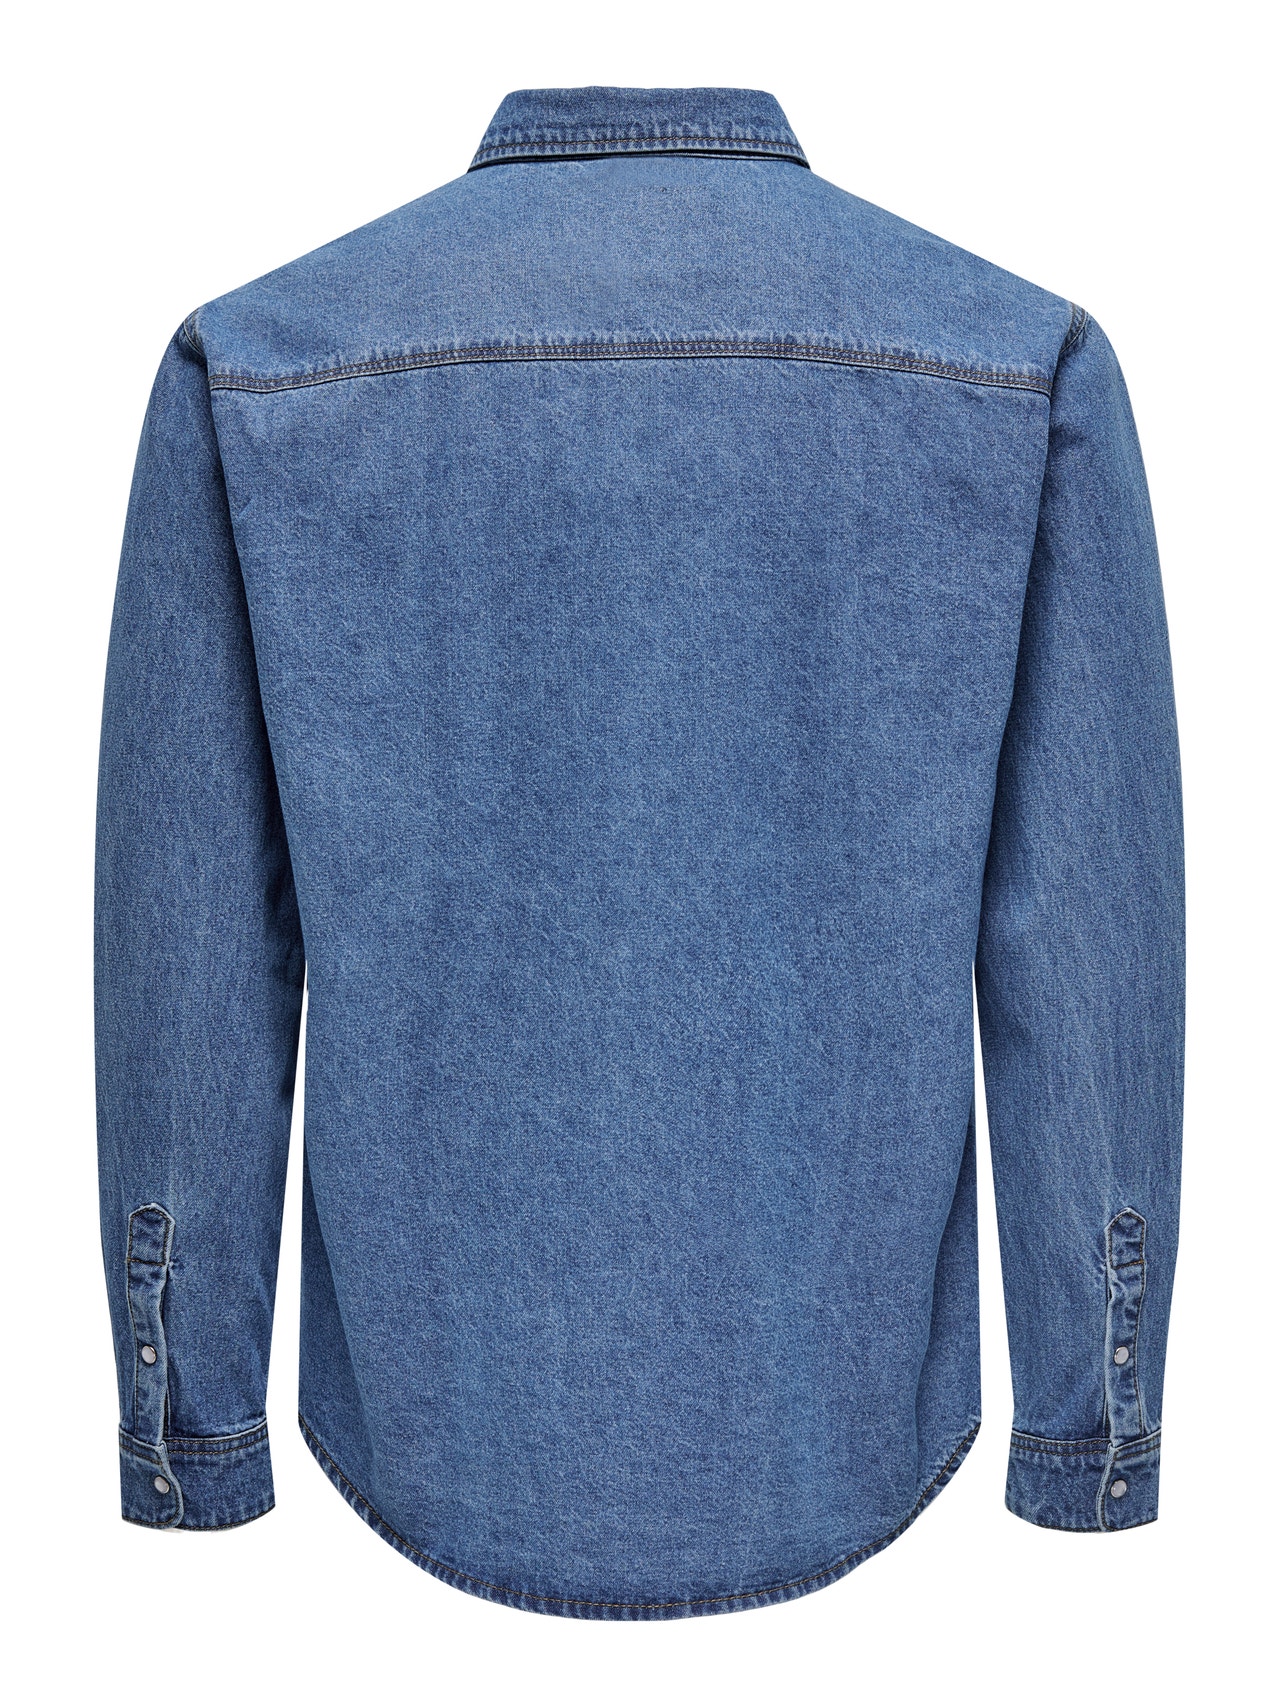 ONLY & SONS Denim shirt with chest pockets -Medium Blue Denim - 22023247